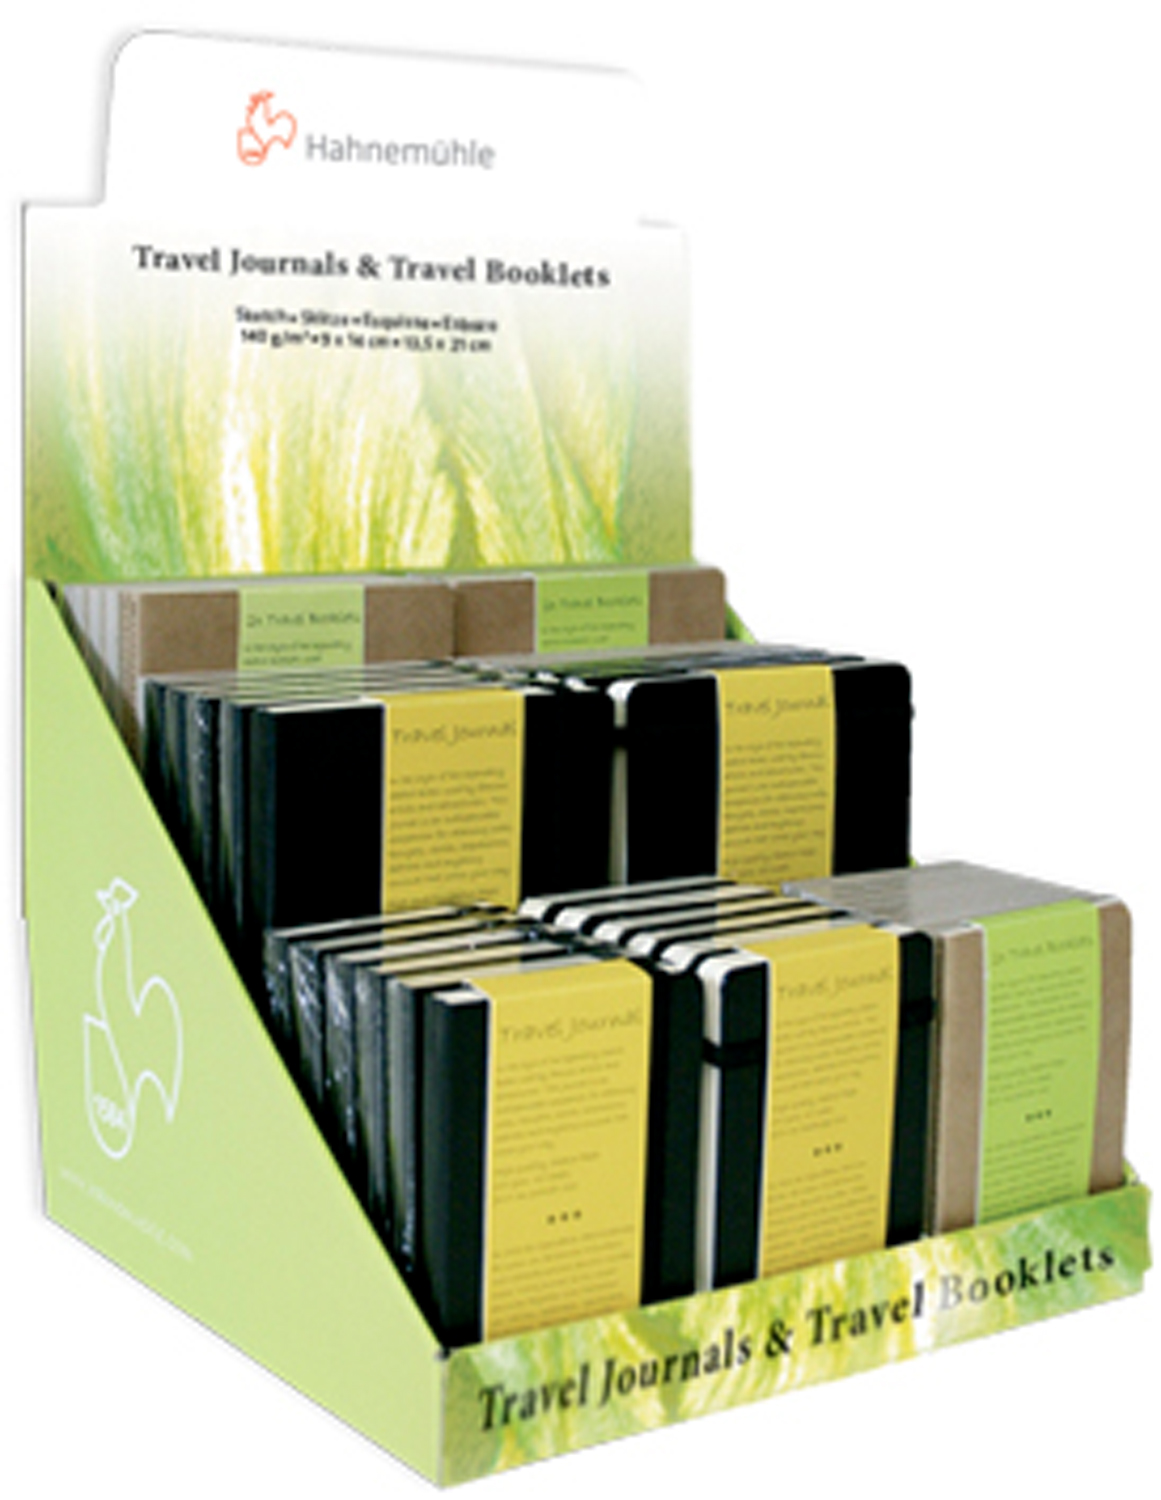 Travel Journals & Travel Booklets